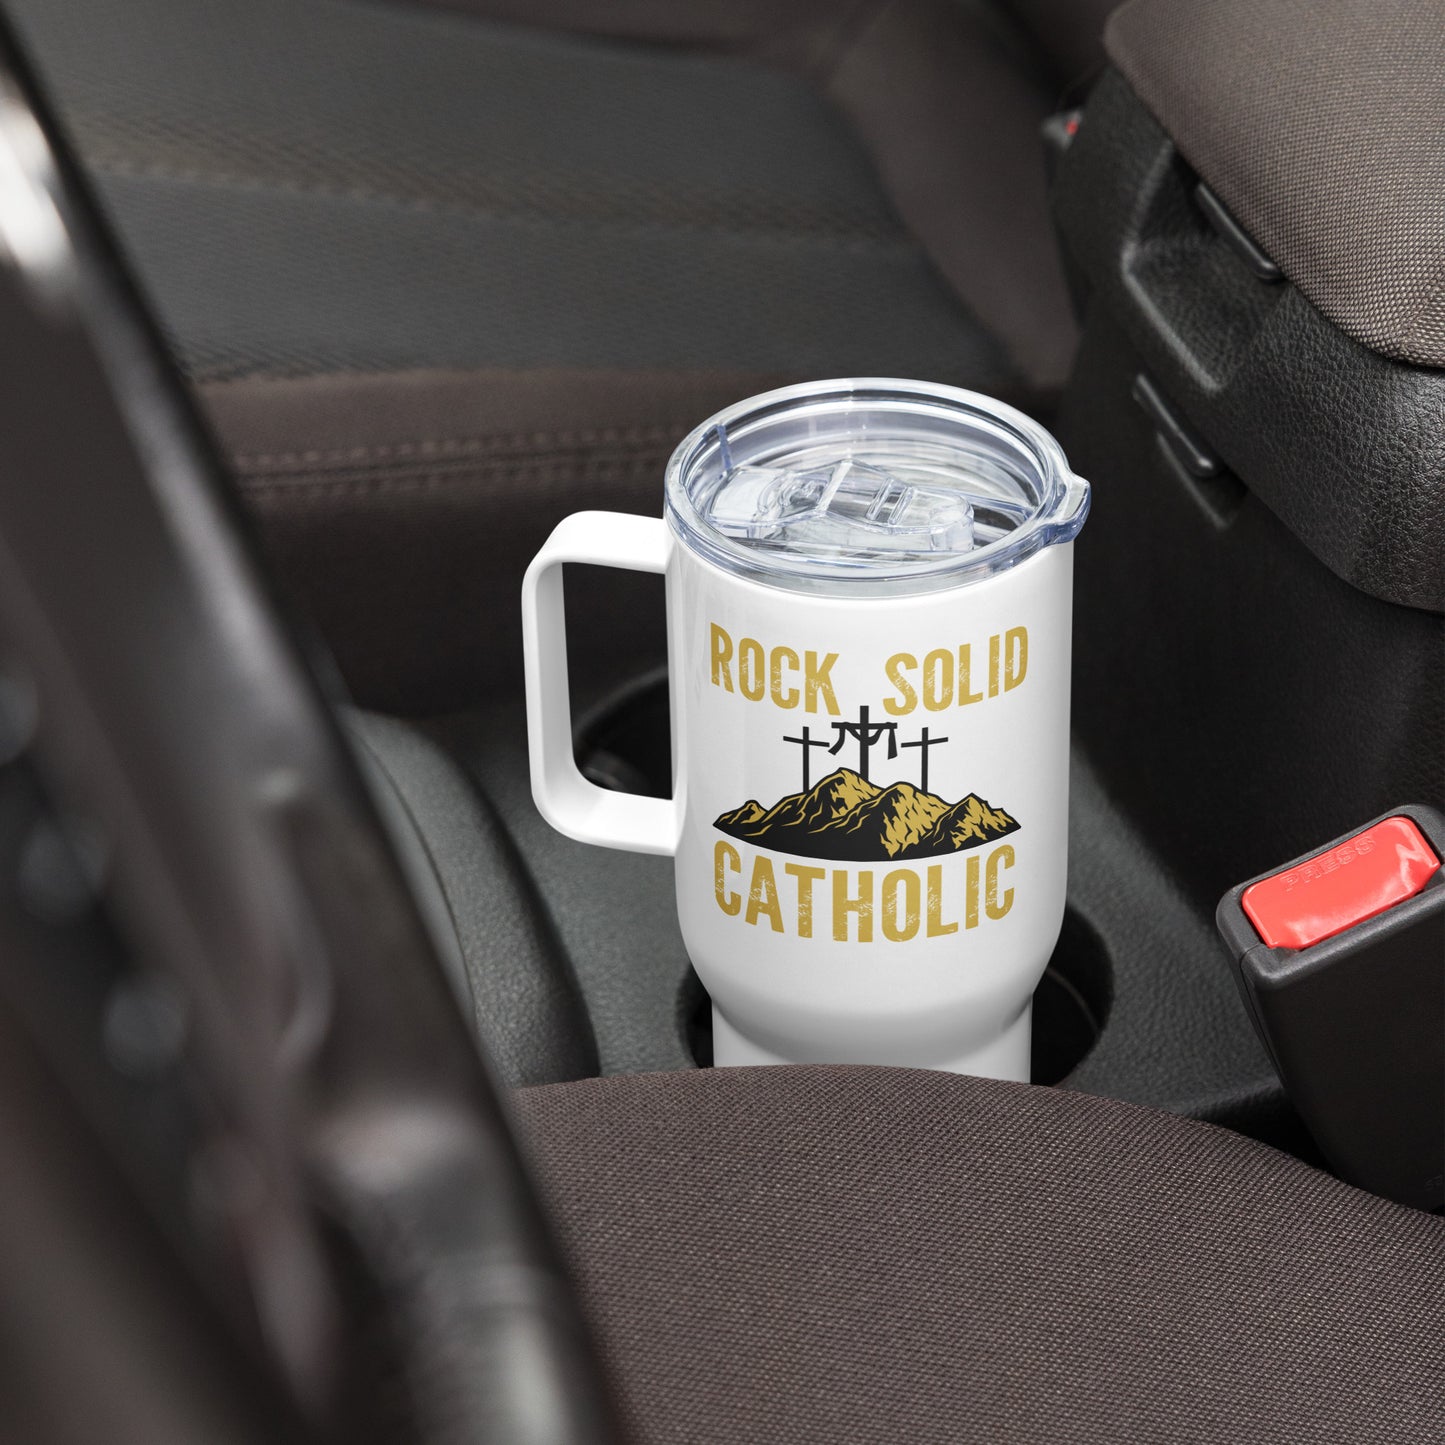 Rock Solid Catholic Travel mug with a handle